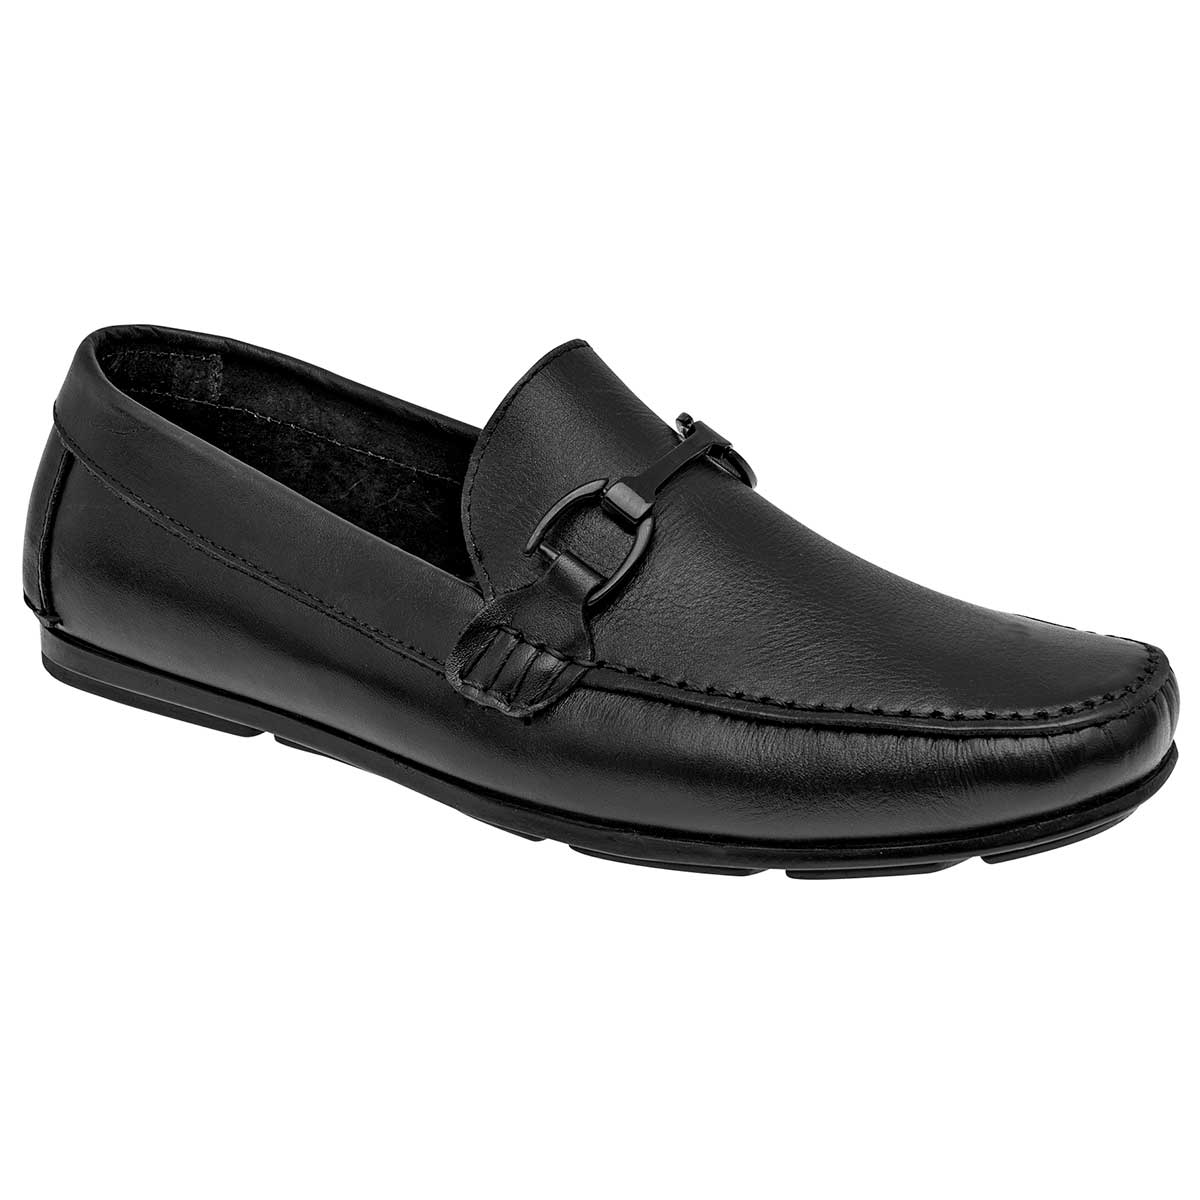 Pakar.com - Mayo: Regalos para mamá | Zapato casual para hombre cod-112185